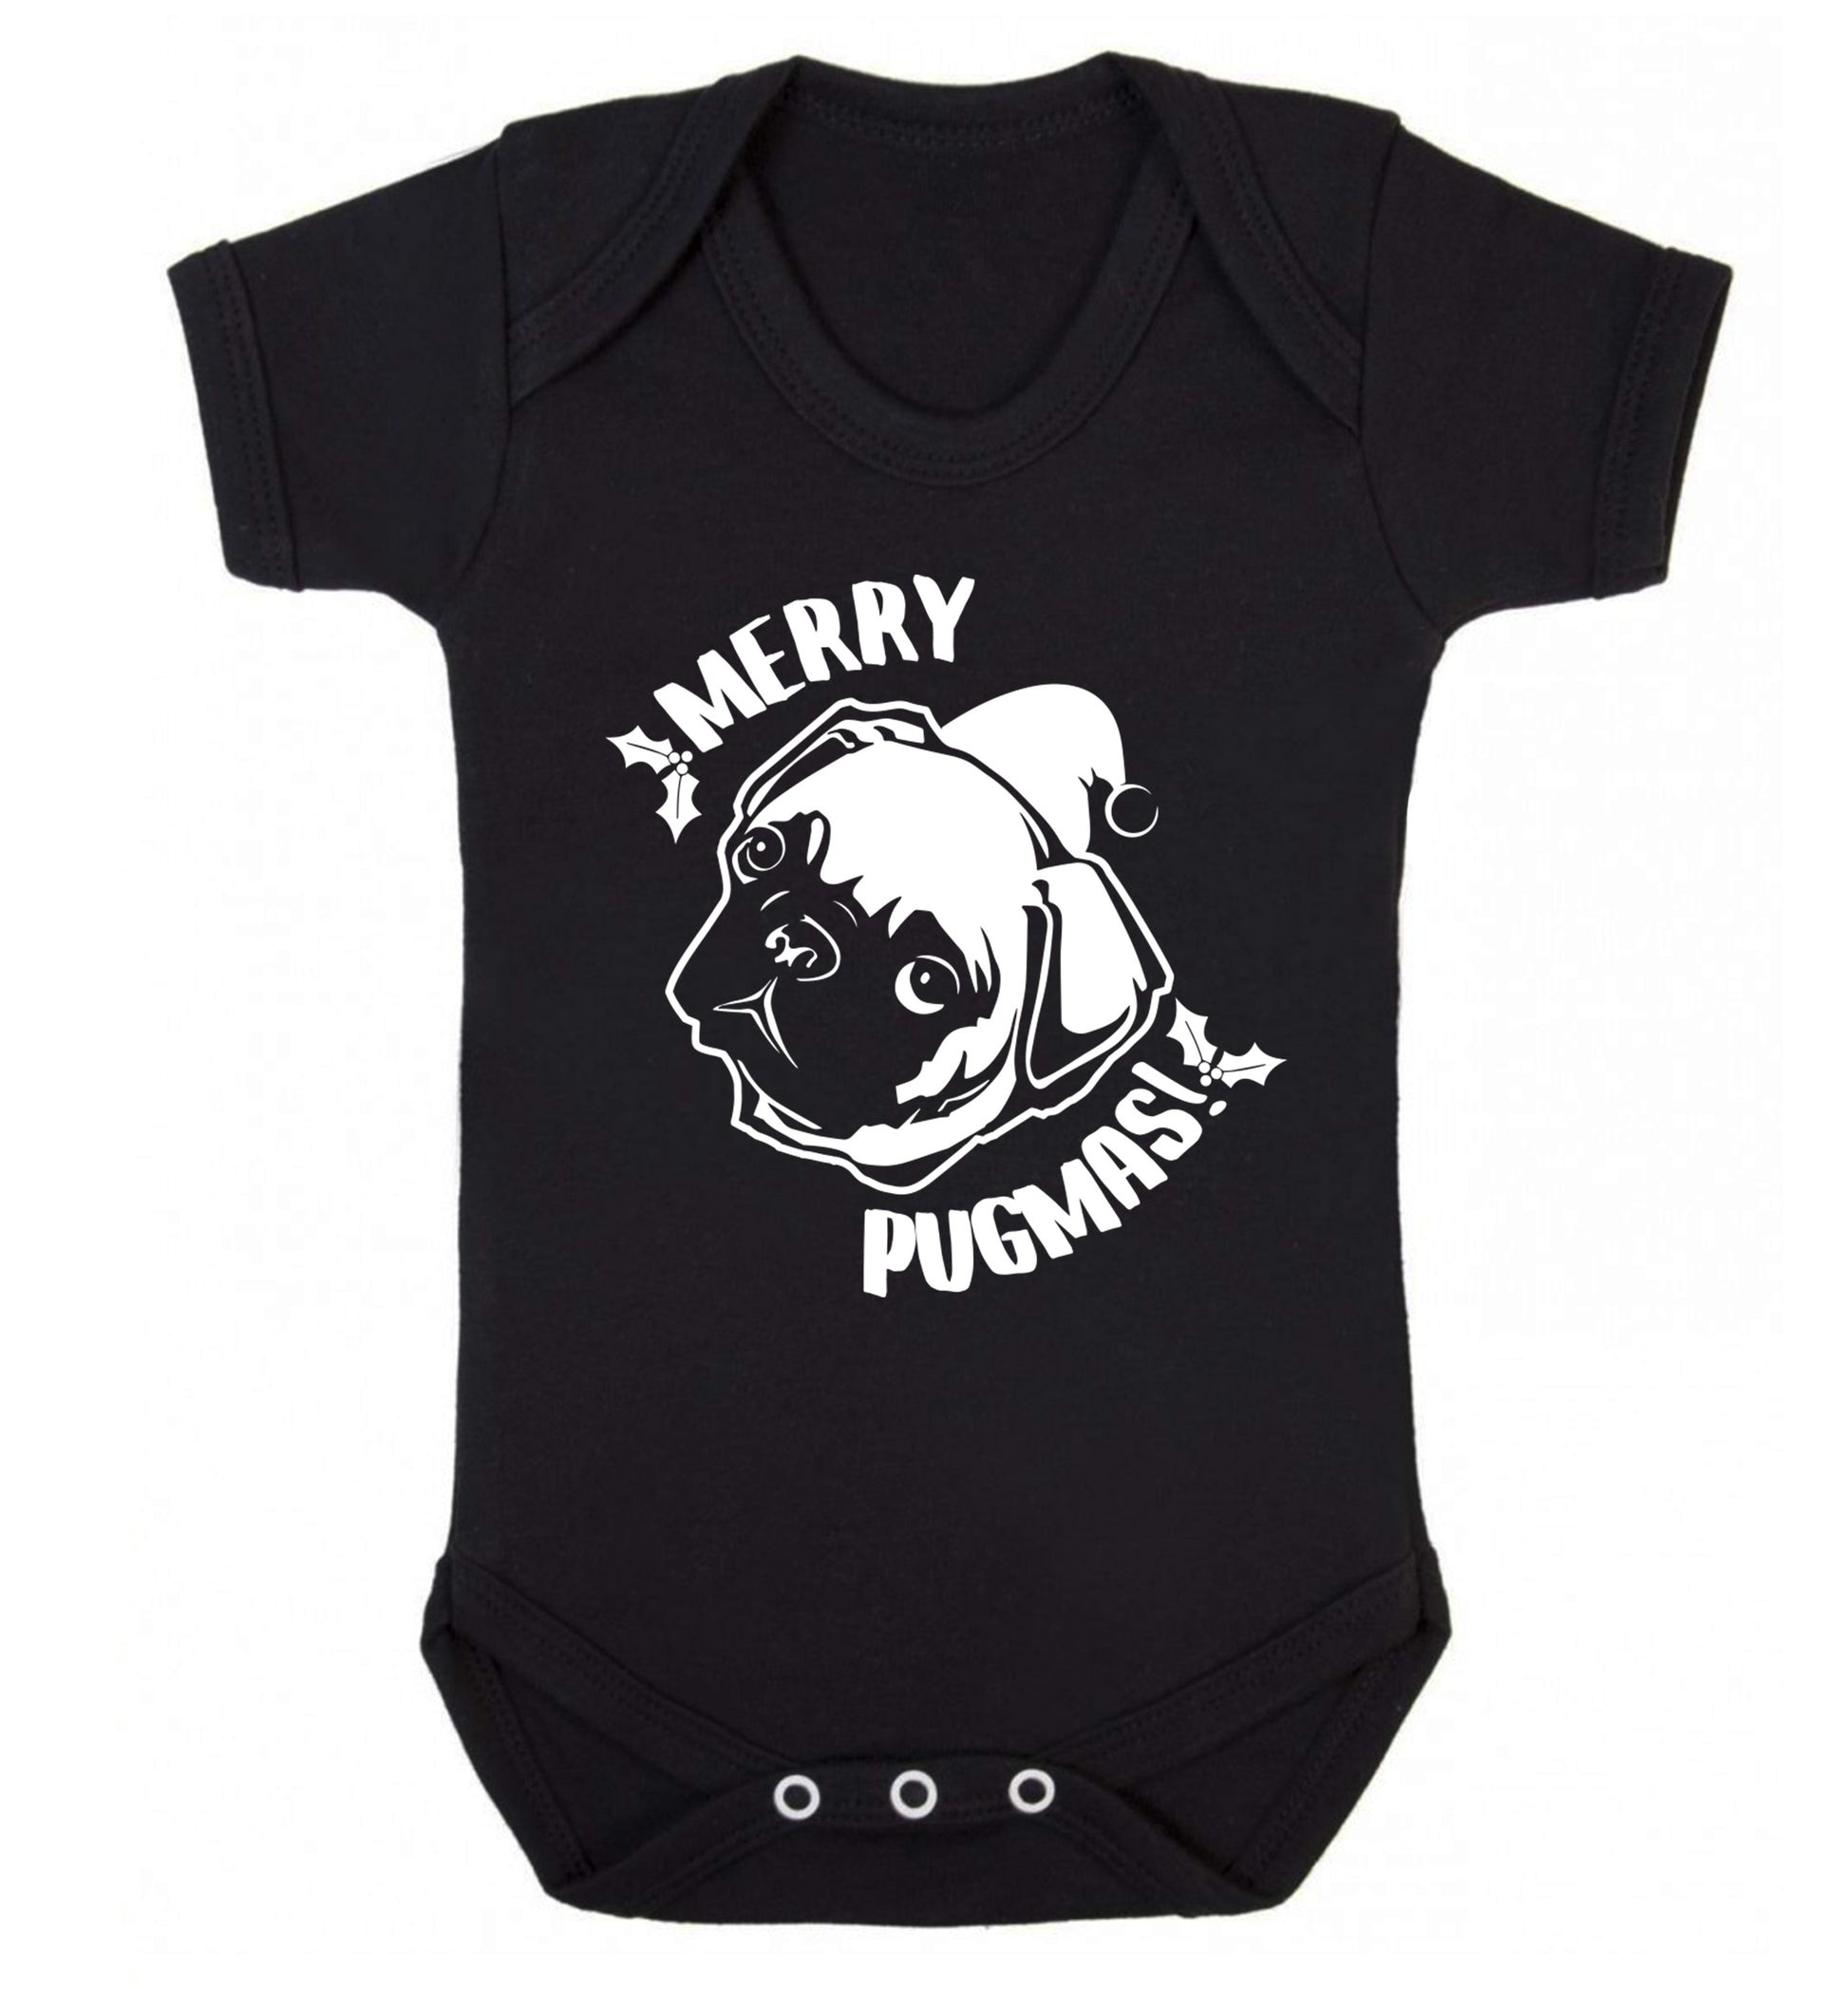 Merry Pugmas Baby Vest black 18-24 months